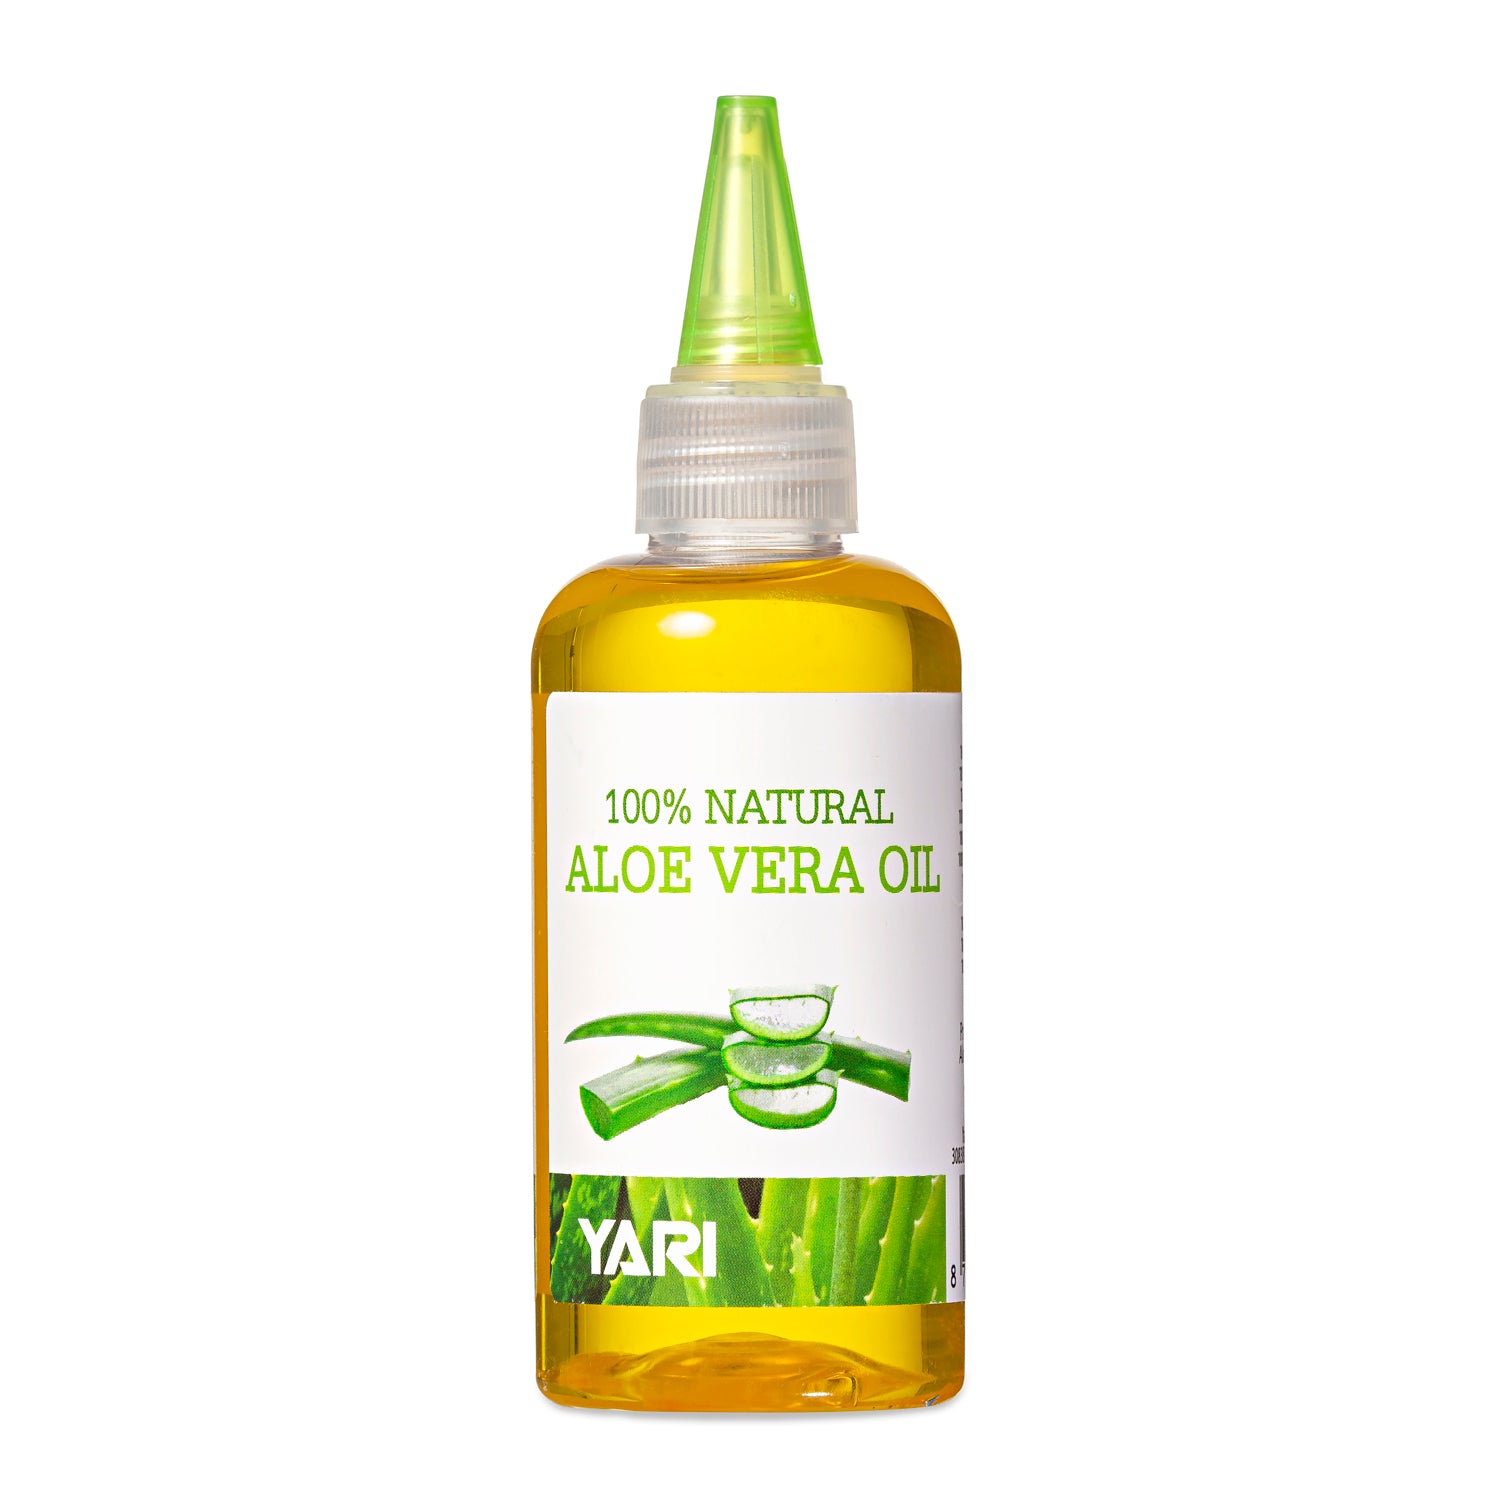 Yari - 100% Natural Aloe Vera Oil 105ml